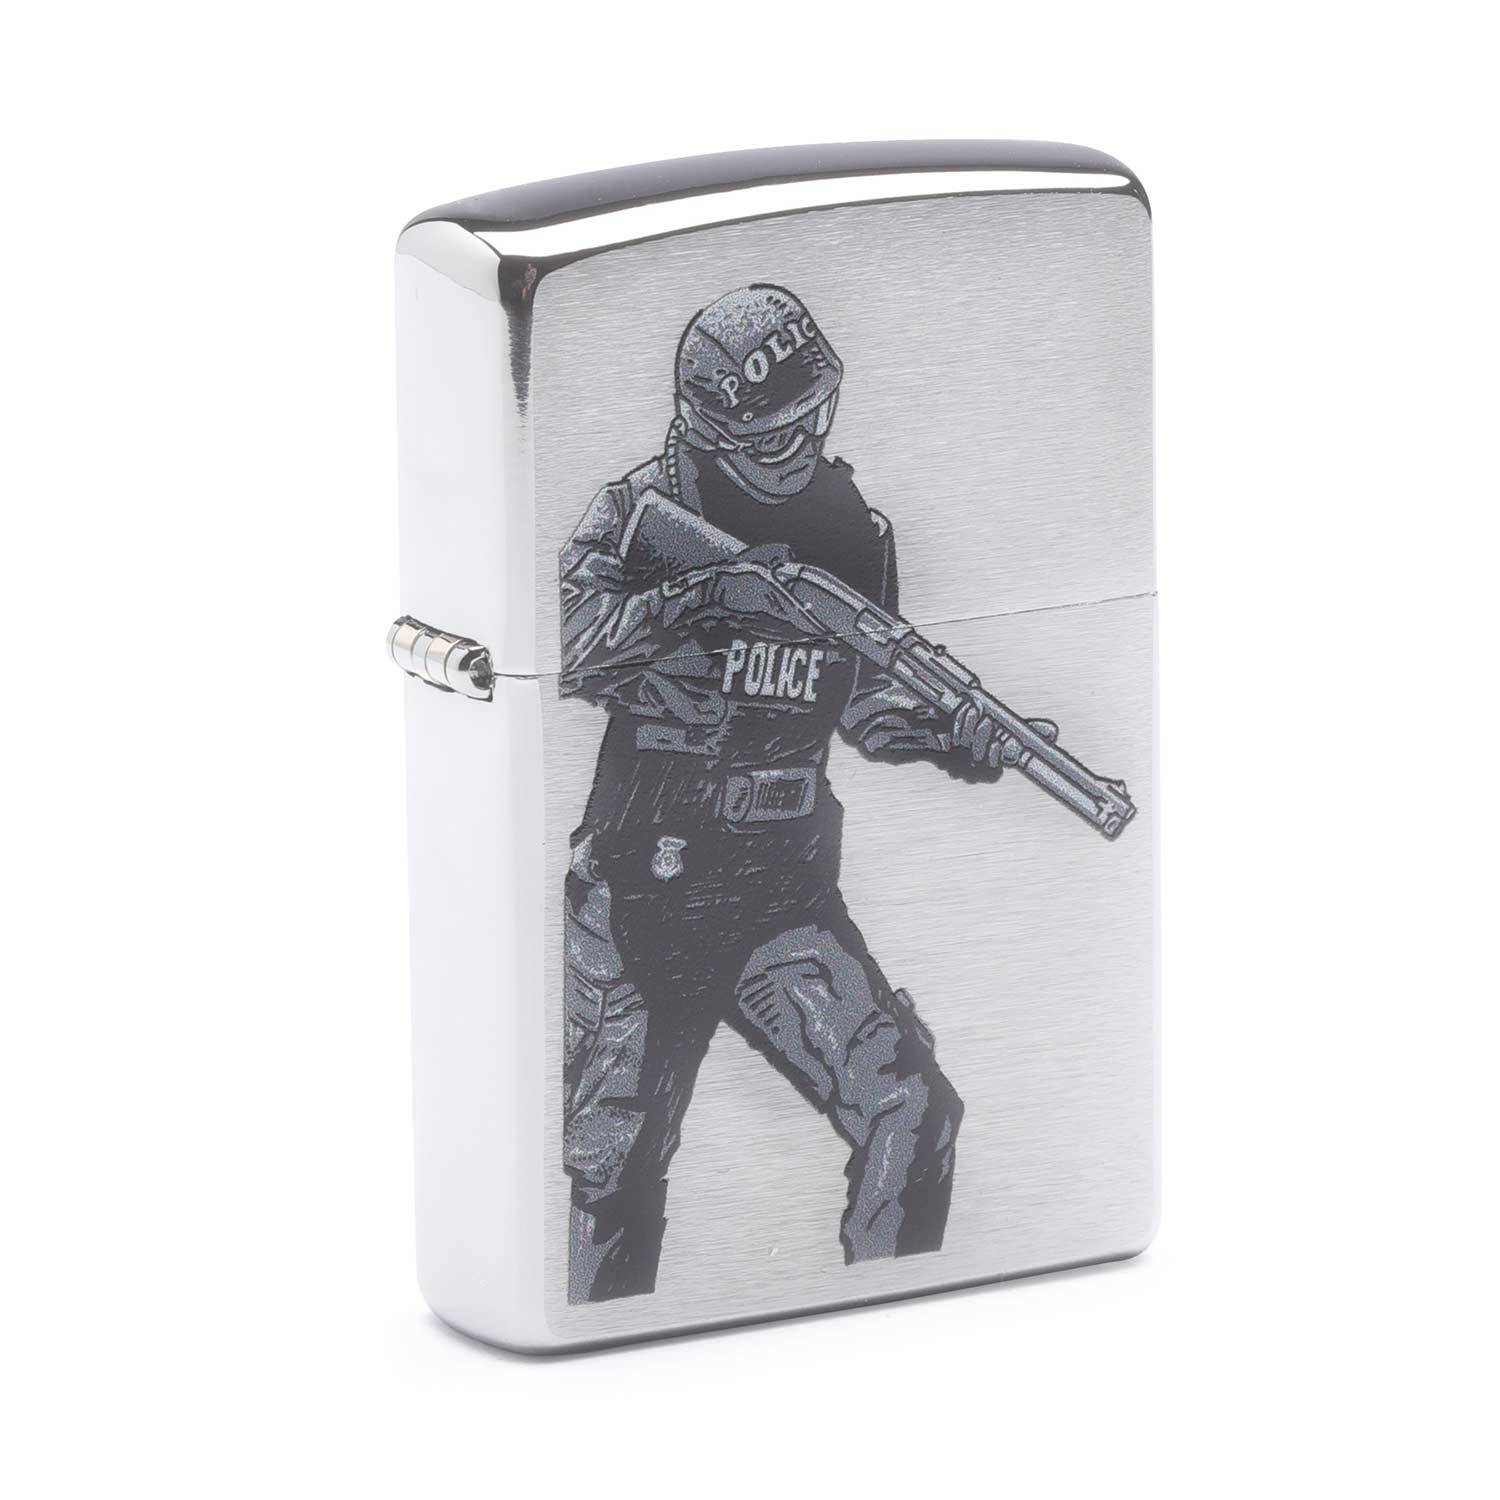 Zippo "Tactical Police" Lighter